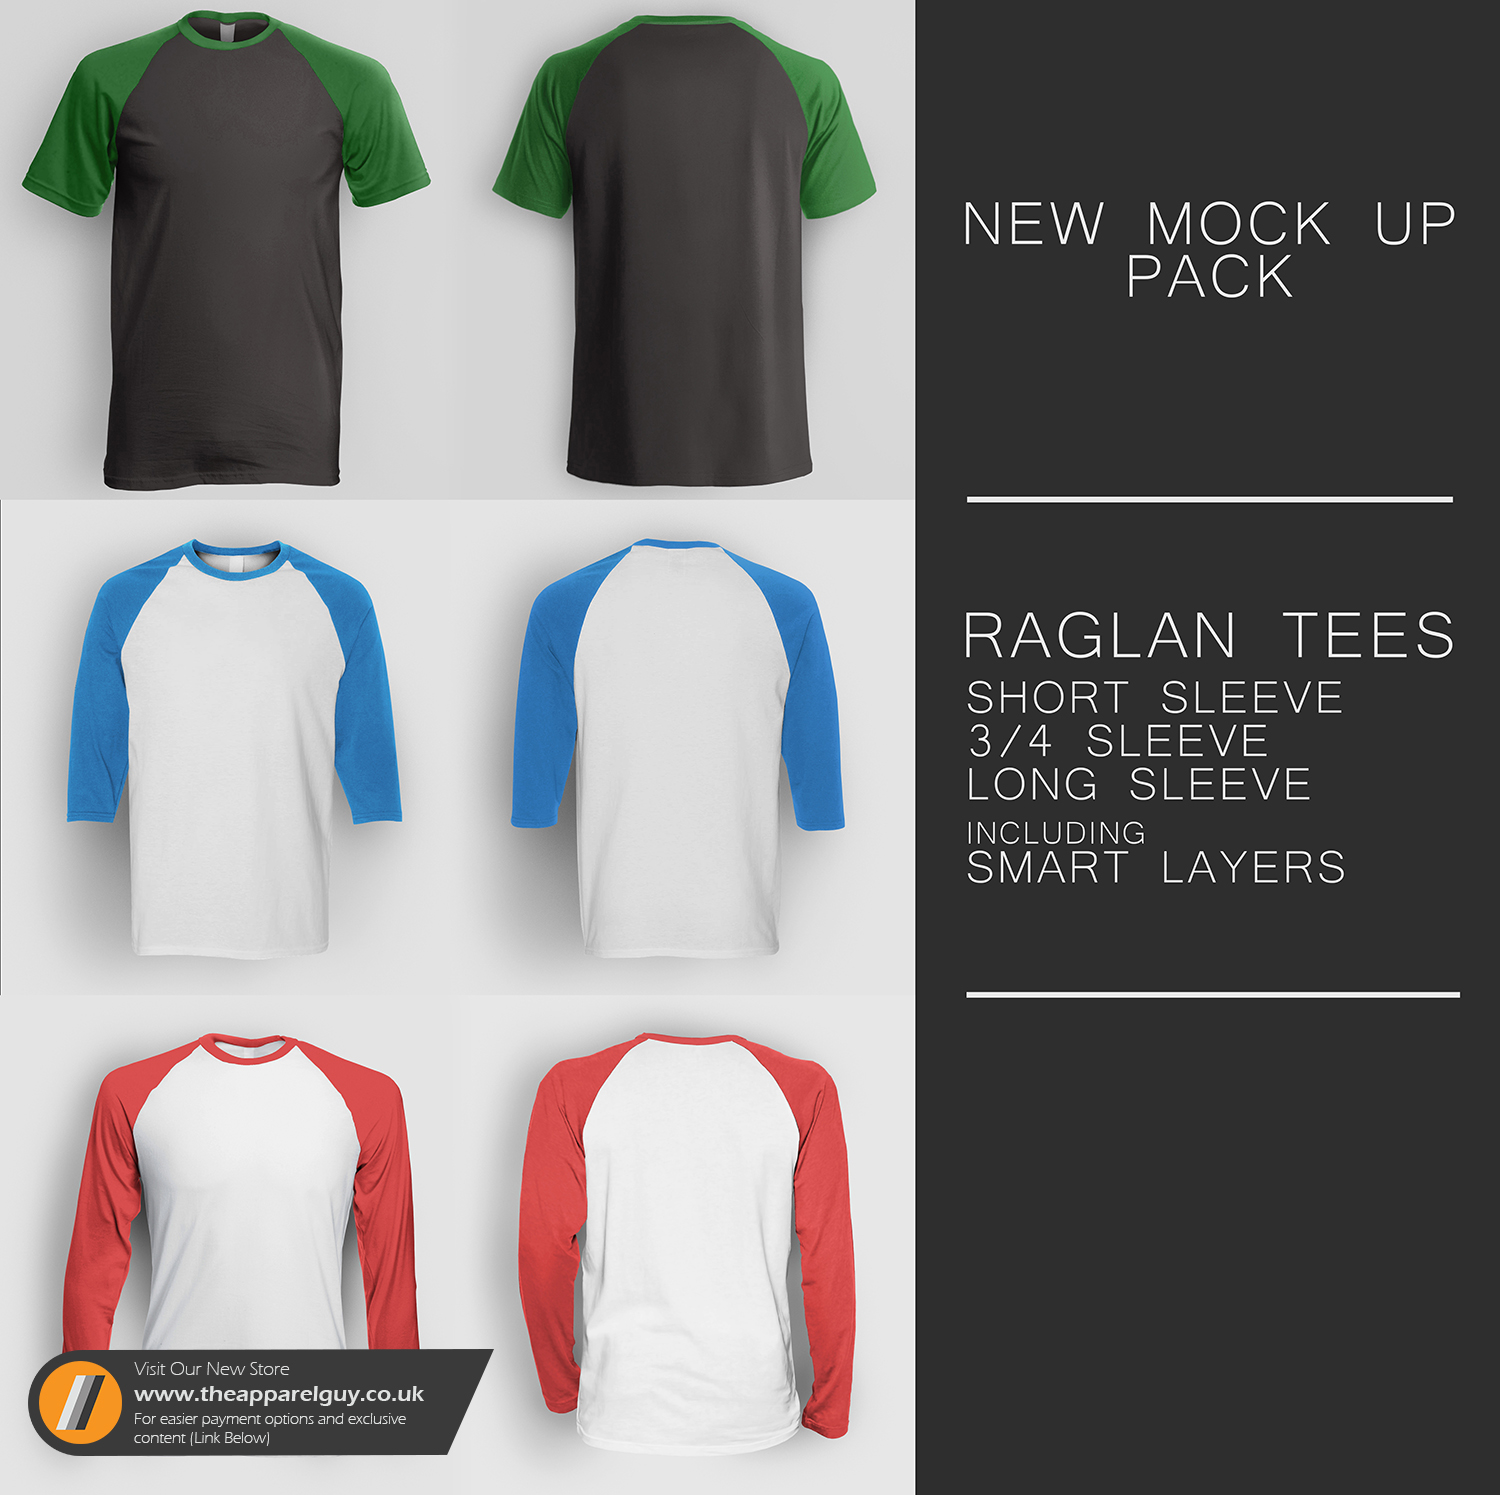 Download Men's Raglan Tee Pack by TheApparelGuy on DeviantArt